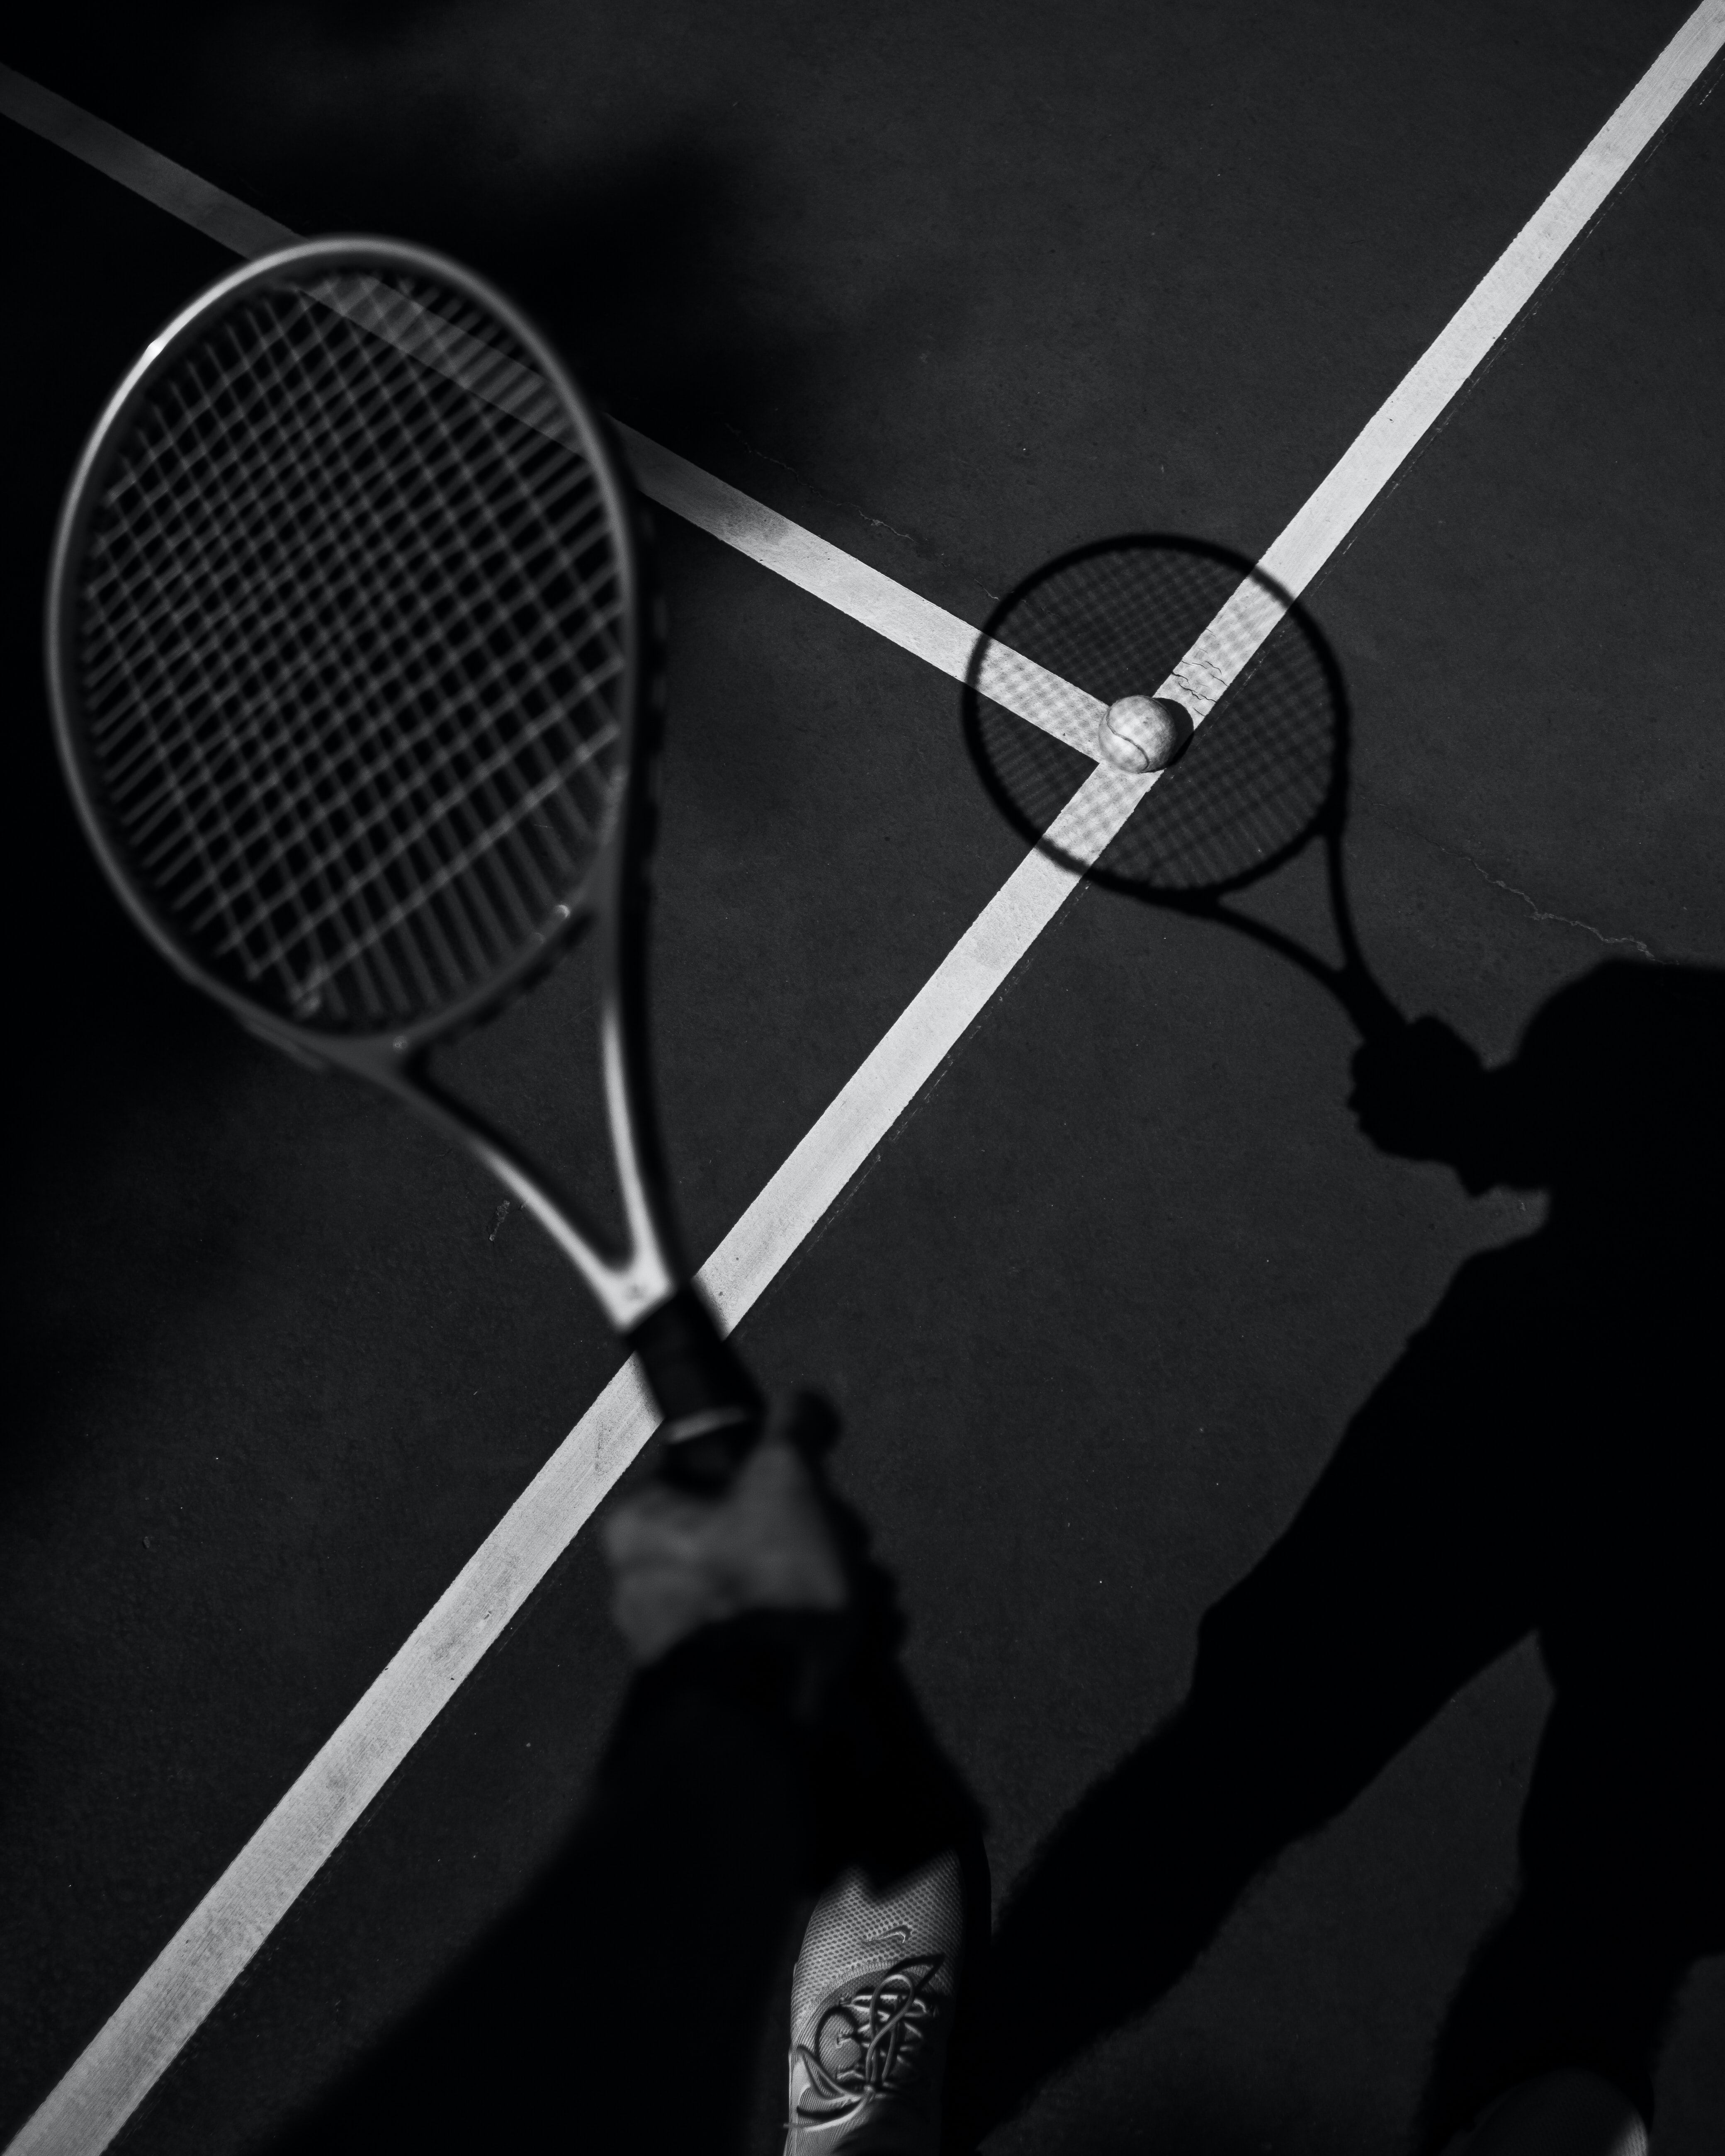 75792 descargar imagen tenis, oscuro, bw, chb, raqueta, pelota de tenis: fondos de pantalla y protectores de pantalla gratis